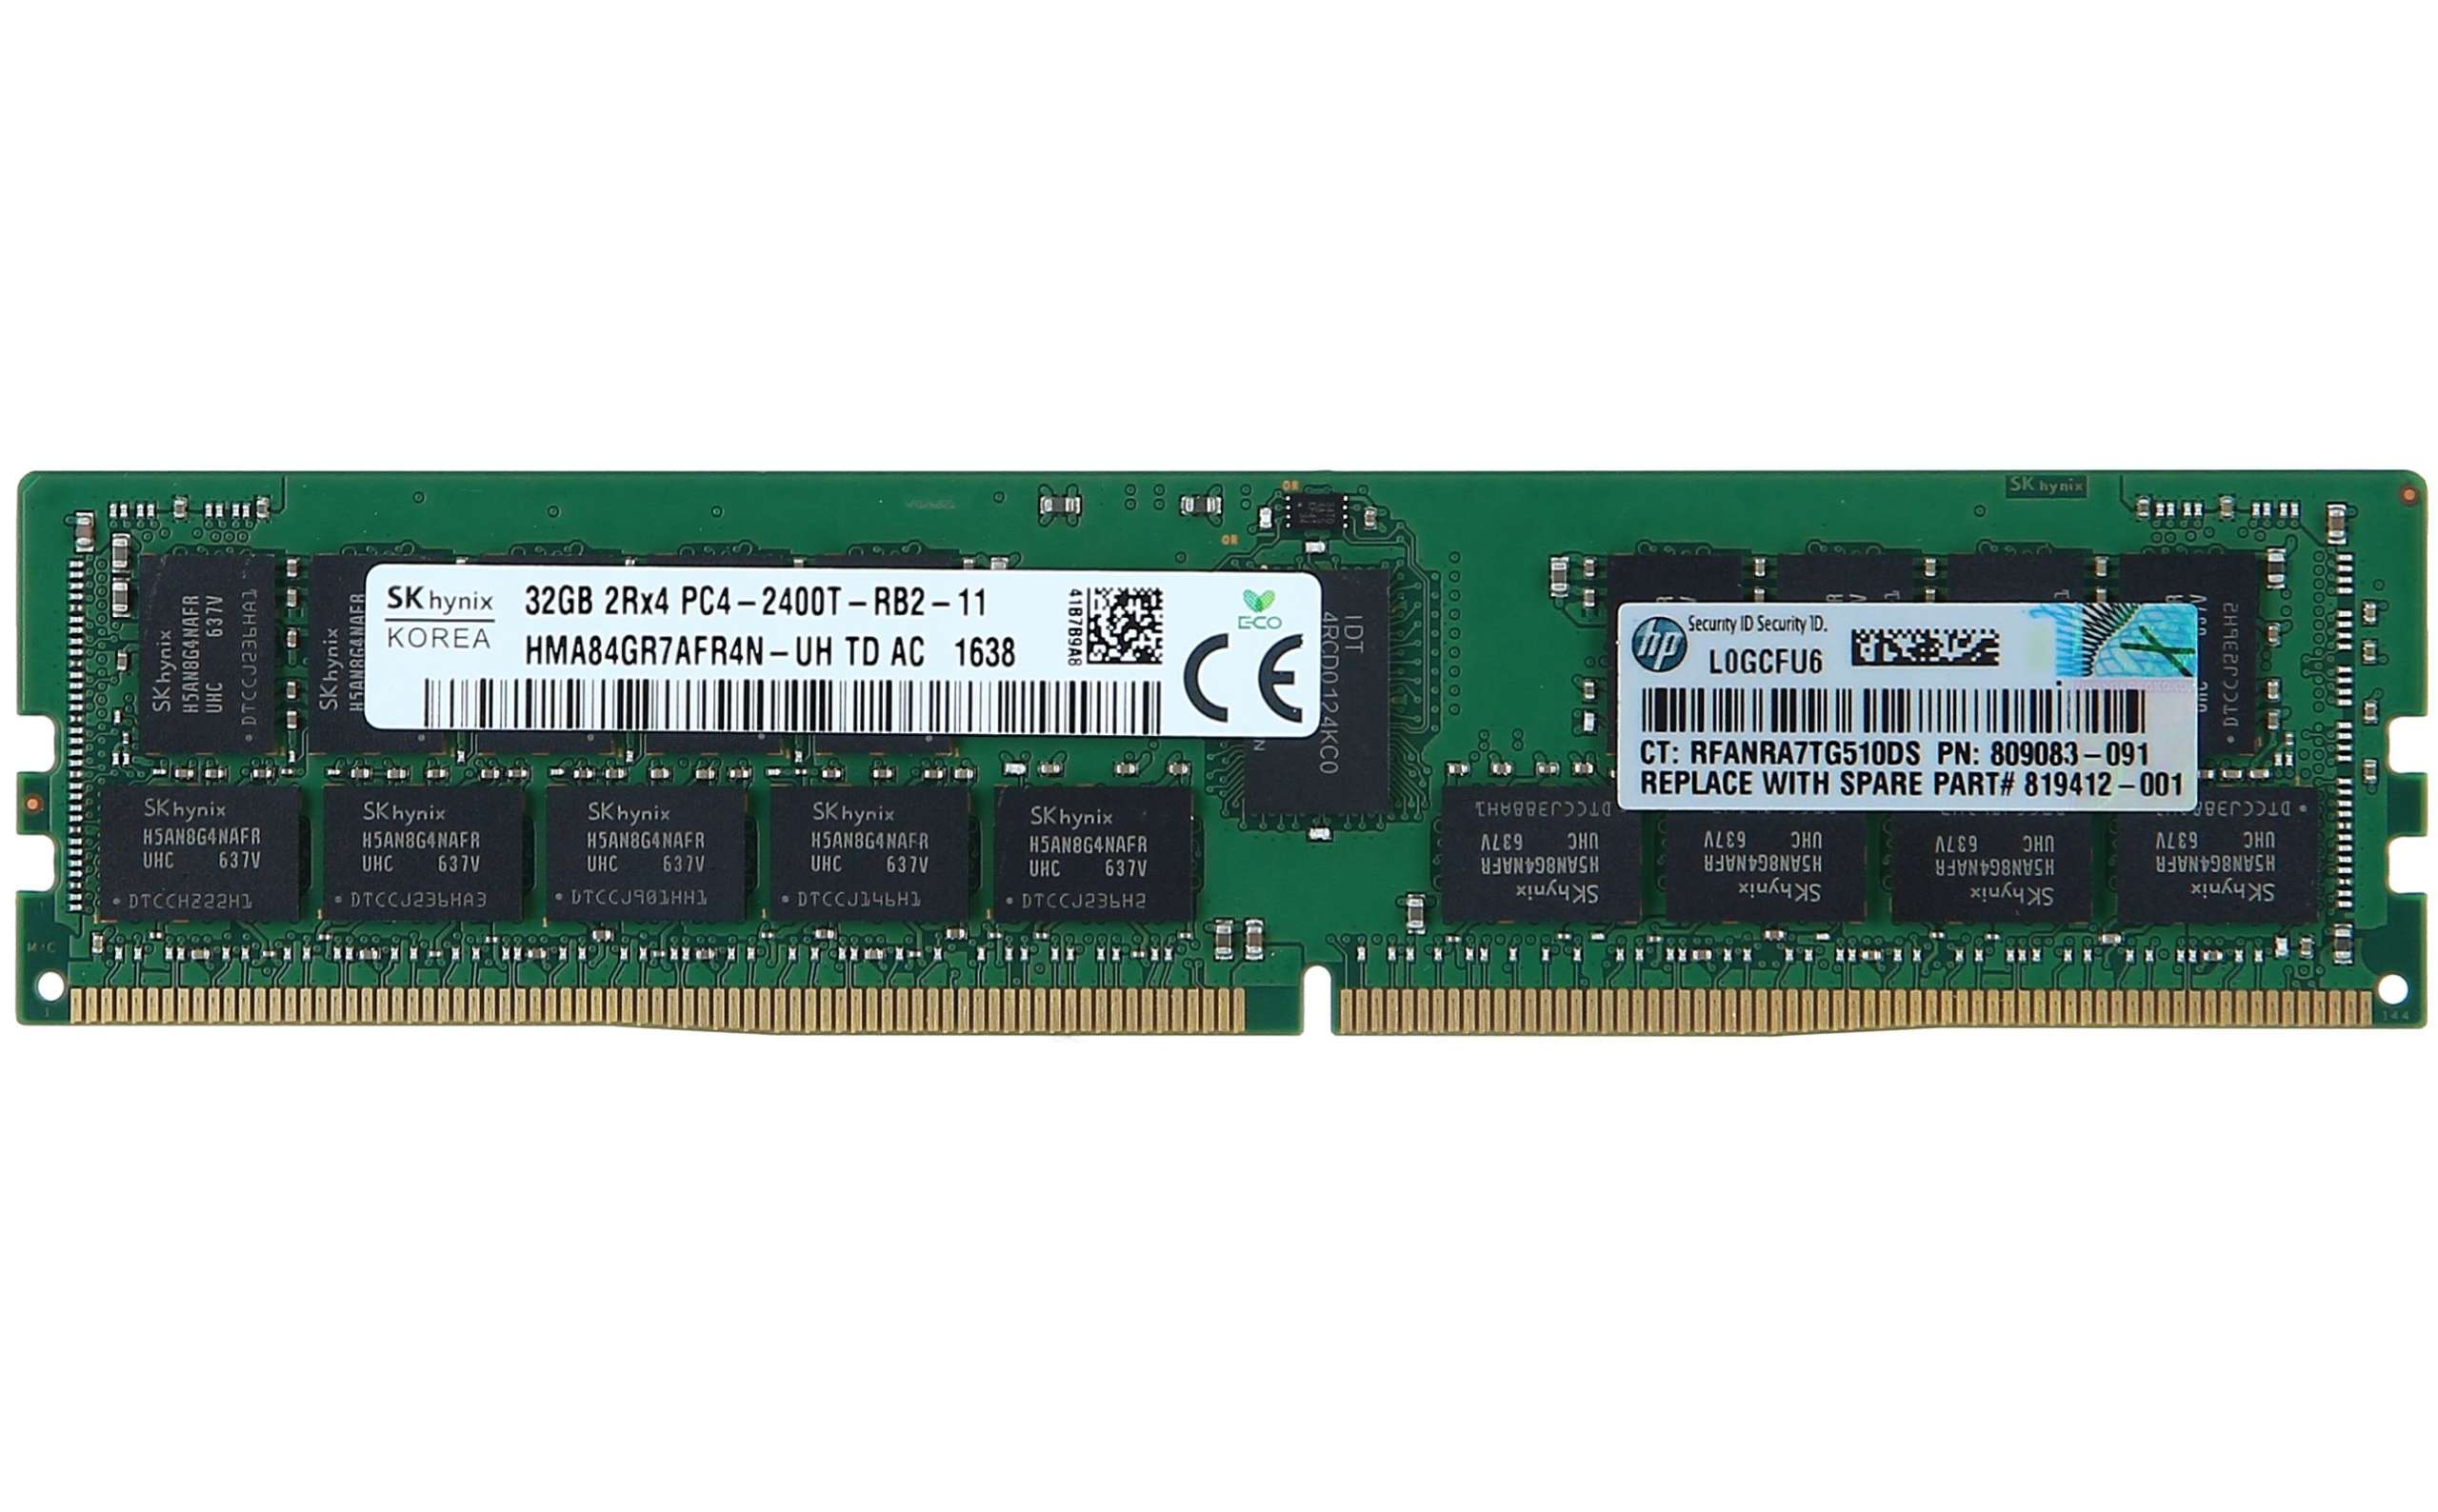 Hewlett Packard Enterprise 2GB PC2-3200 SDRAM DUAL RANK